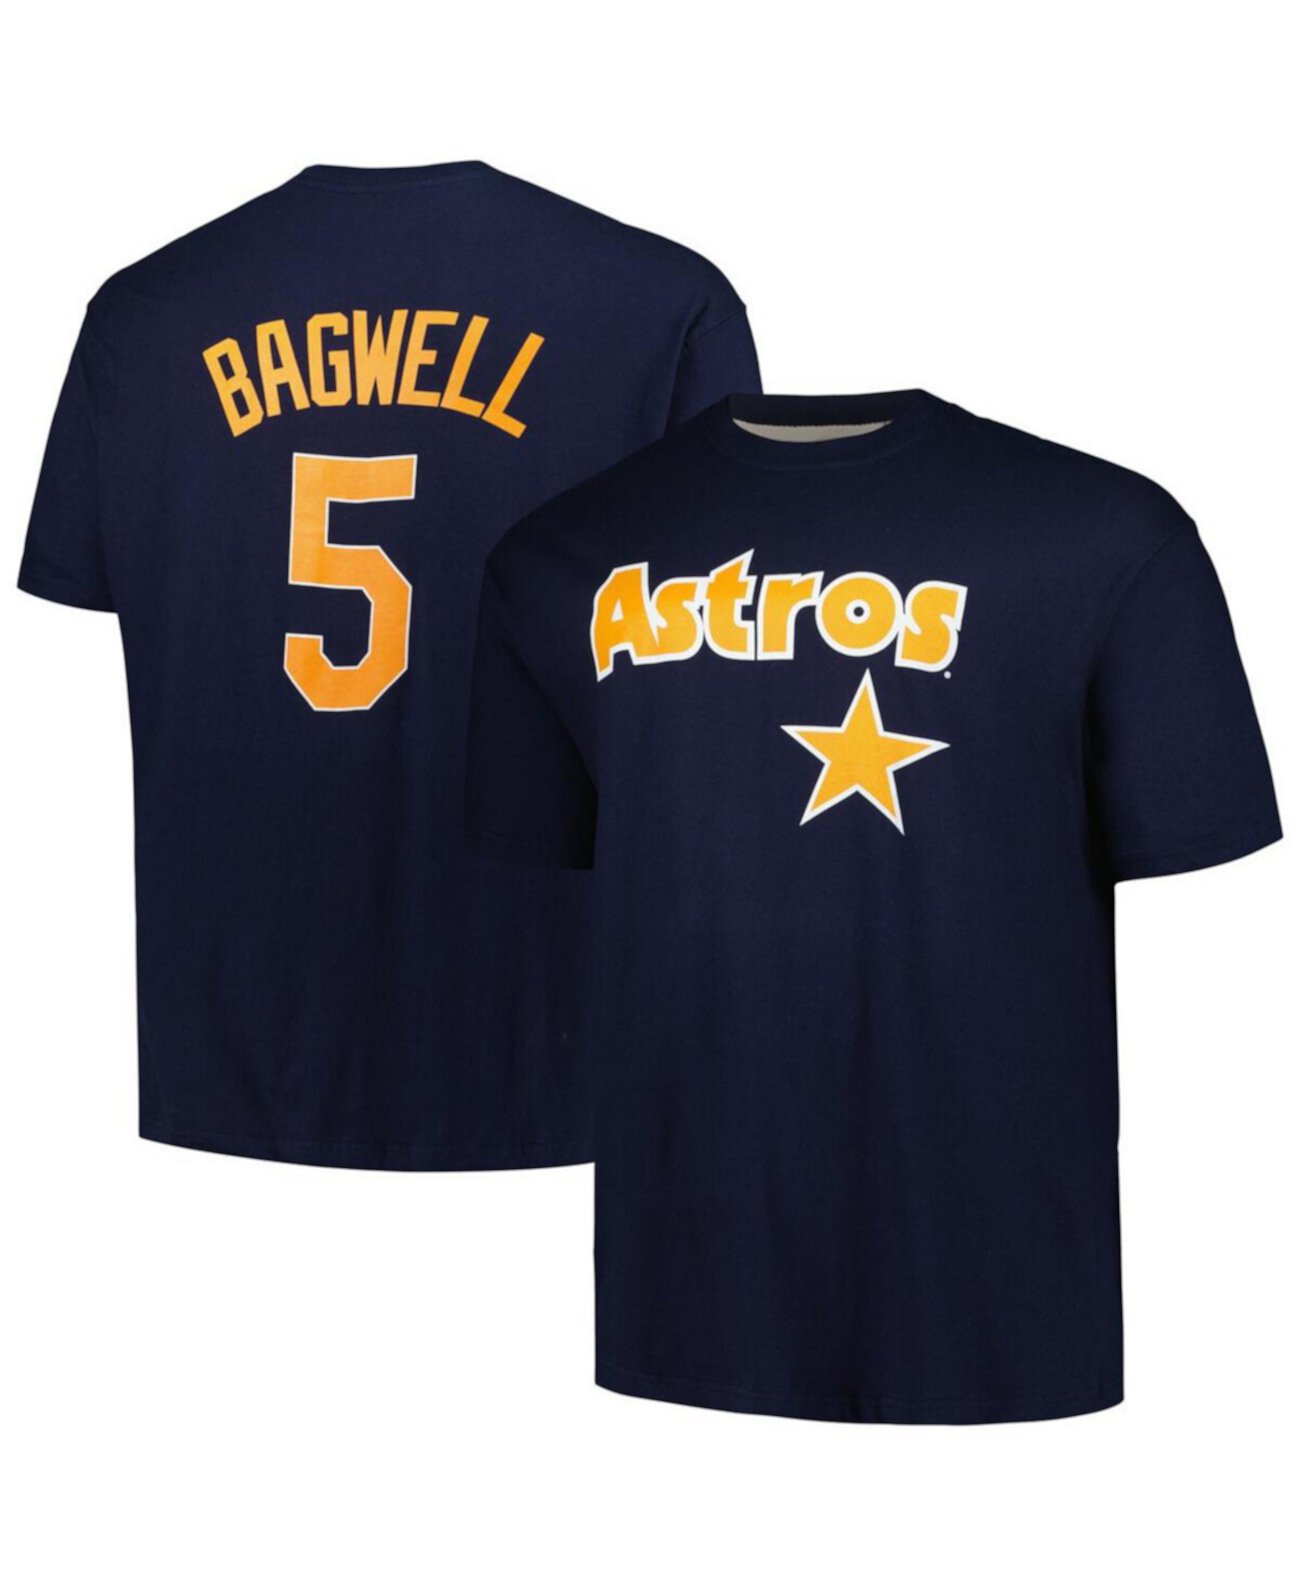 Мужская темно-синяя футболка Jeff Bagwell Houston Astros Big and Tall Cooperstown Collection с именем и номером игрока Profile